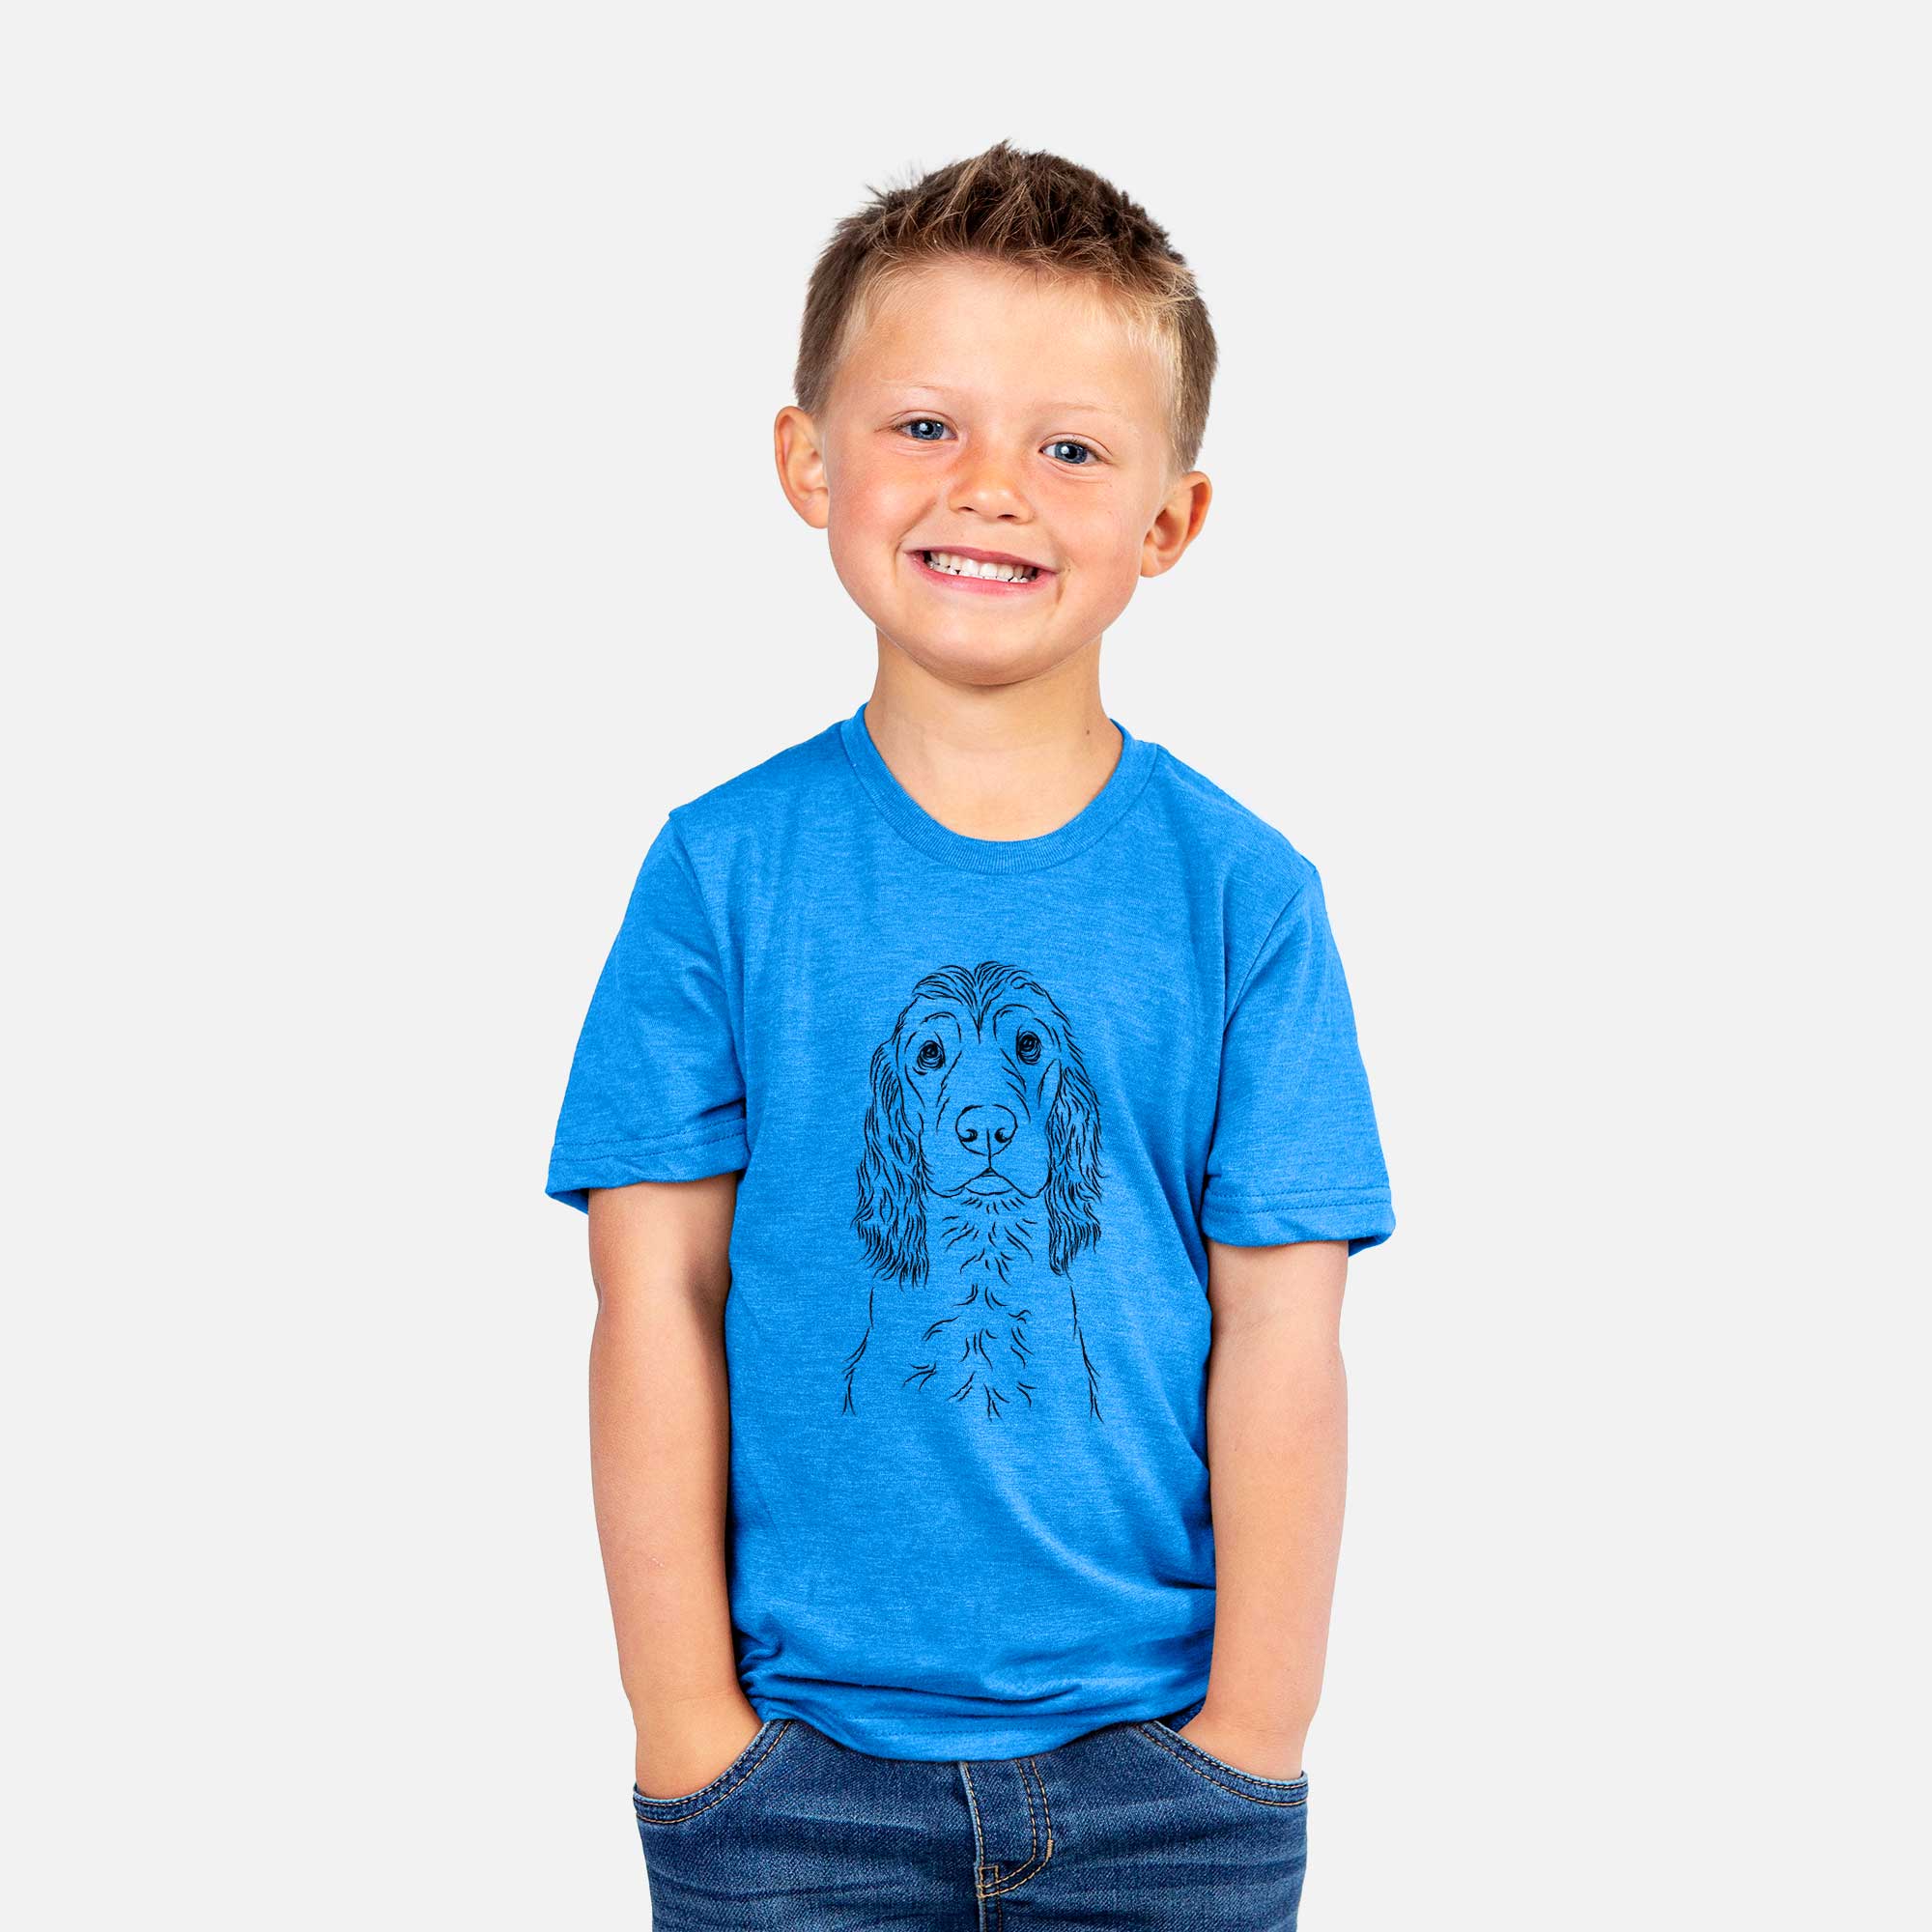 Bare Logan the Cocker Spaniel - Kids/Youth/Toddler Shirt